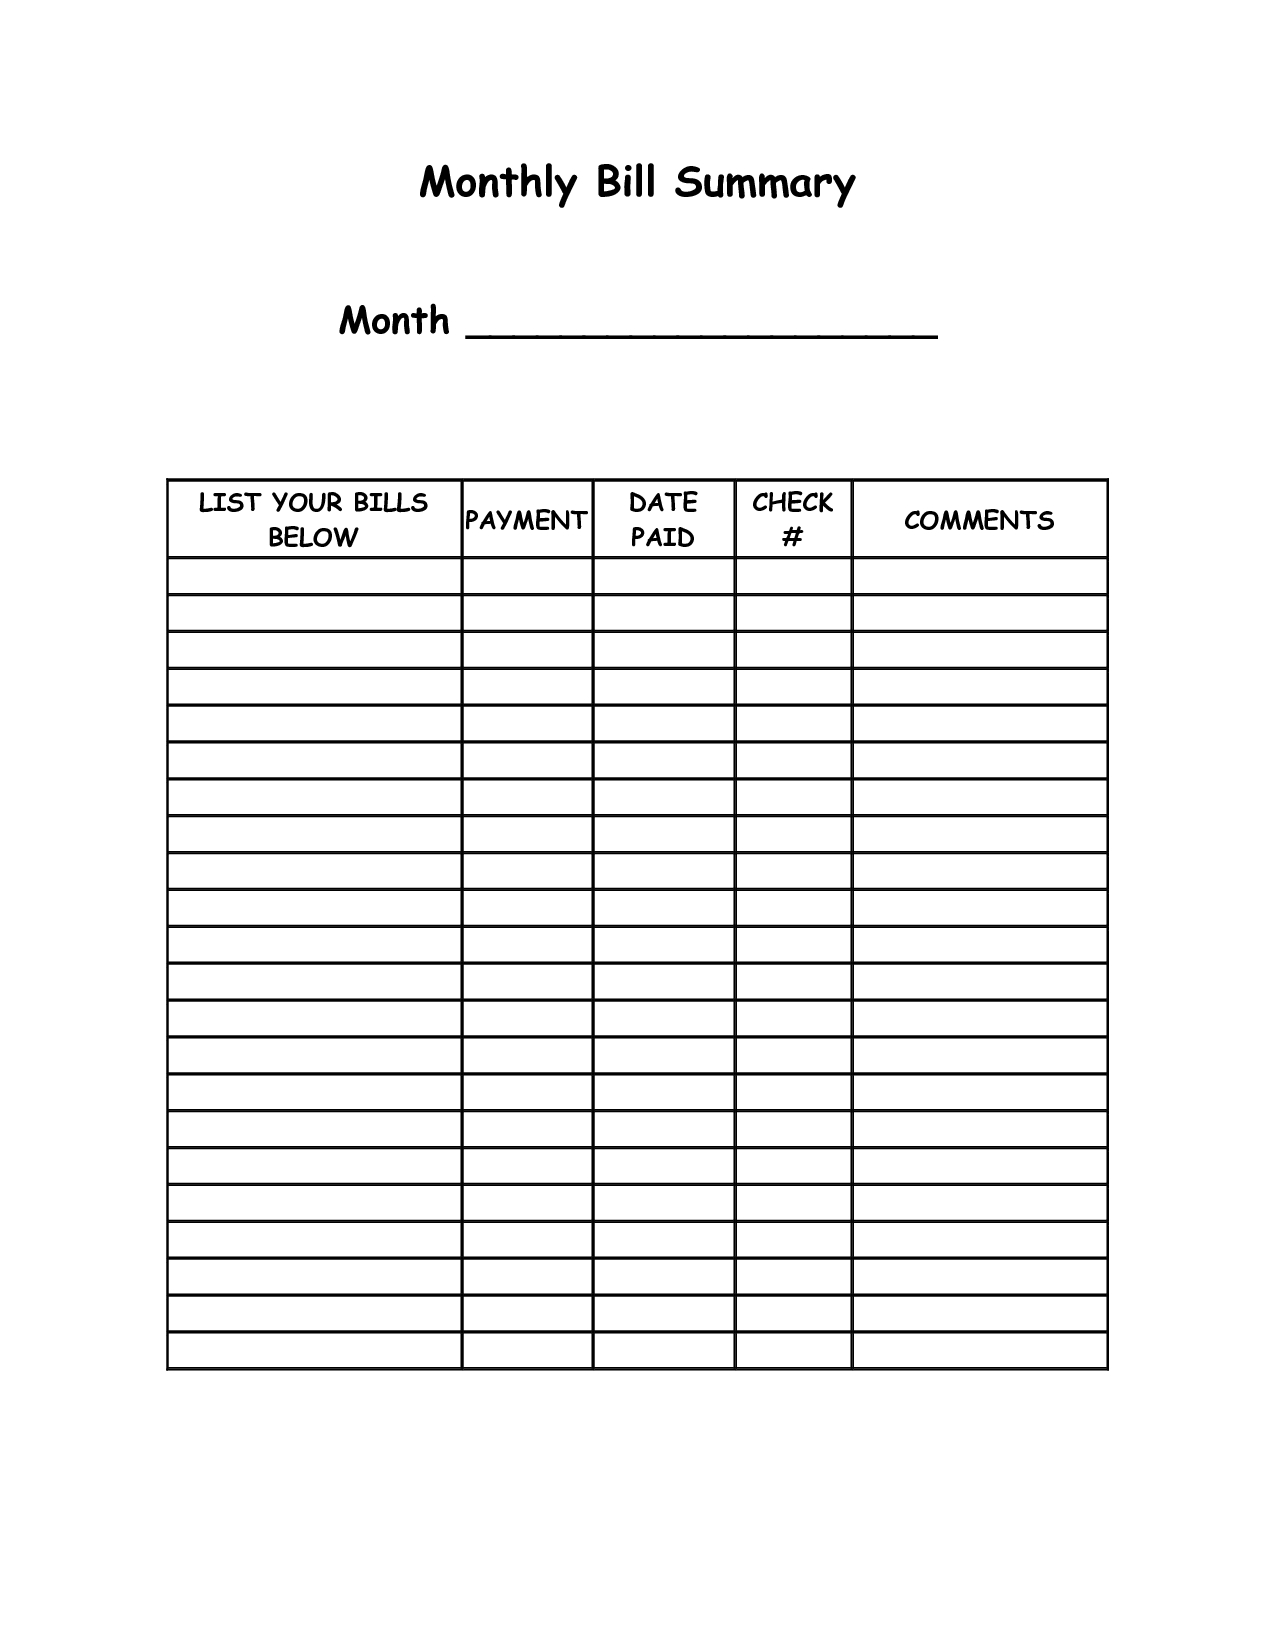 Monthly Bill Summary Doc | Organizing Monthly Bills, Bill-Monthly Bill List Template